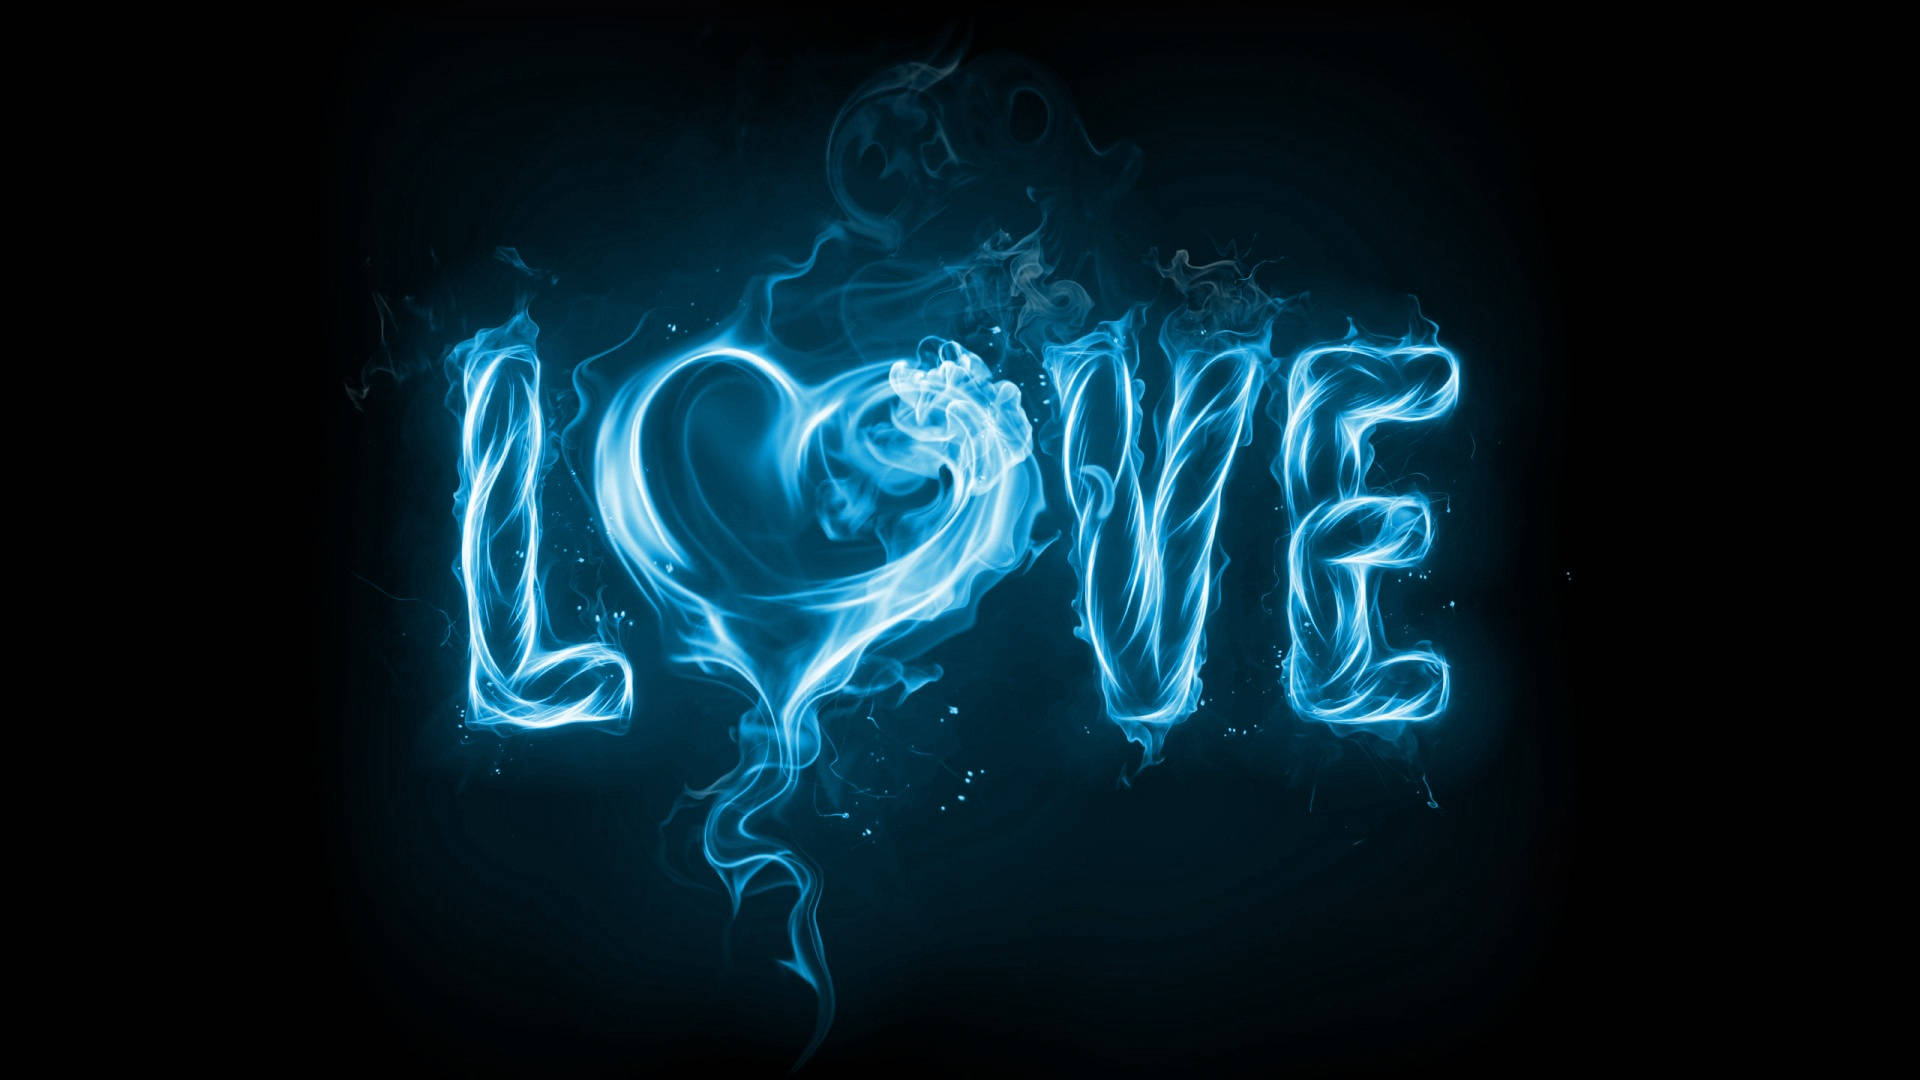 Free Love Art Wallpaper Downloads, [200+] Love Art Wallpapers for FREE |  